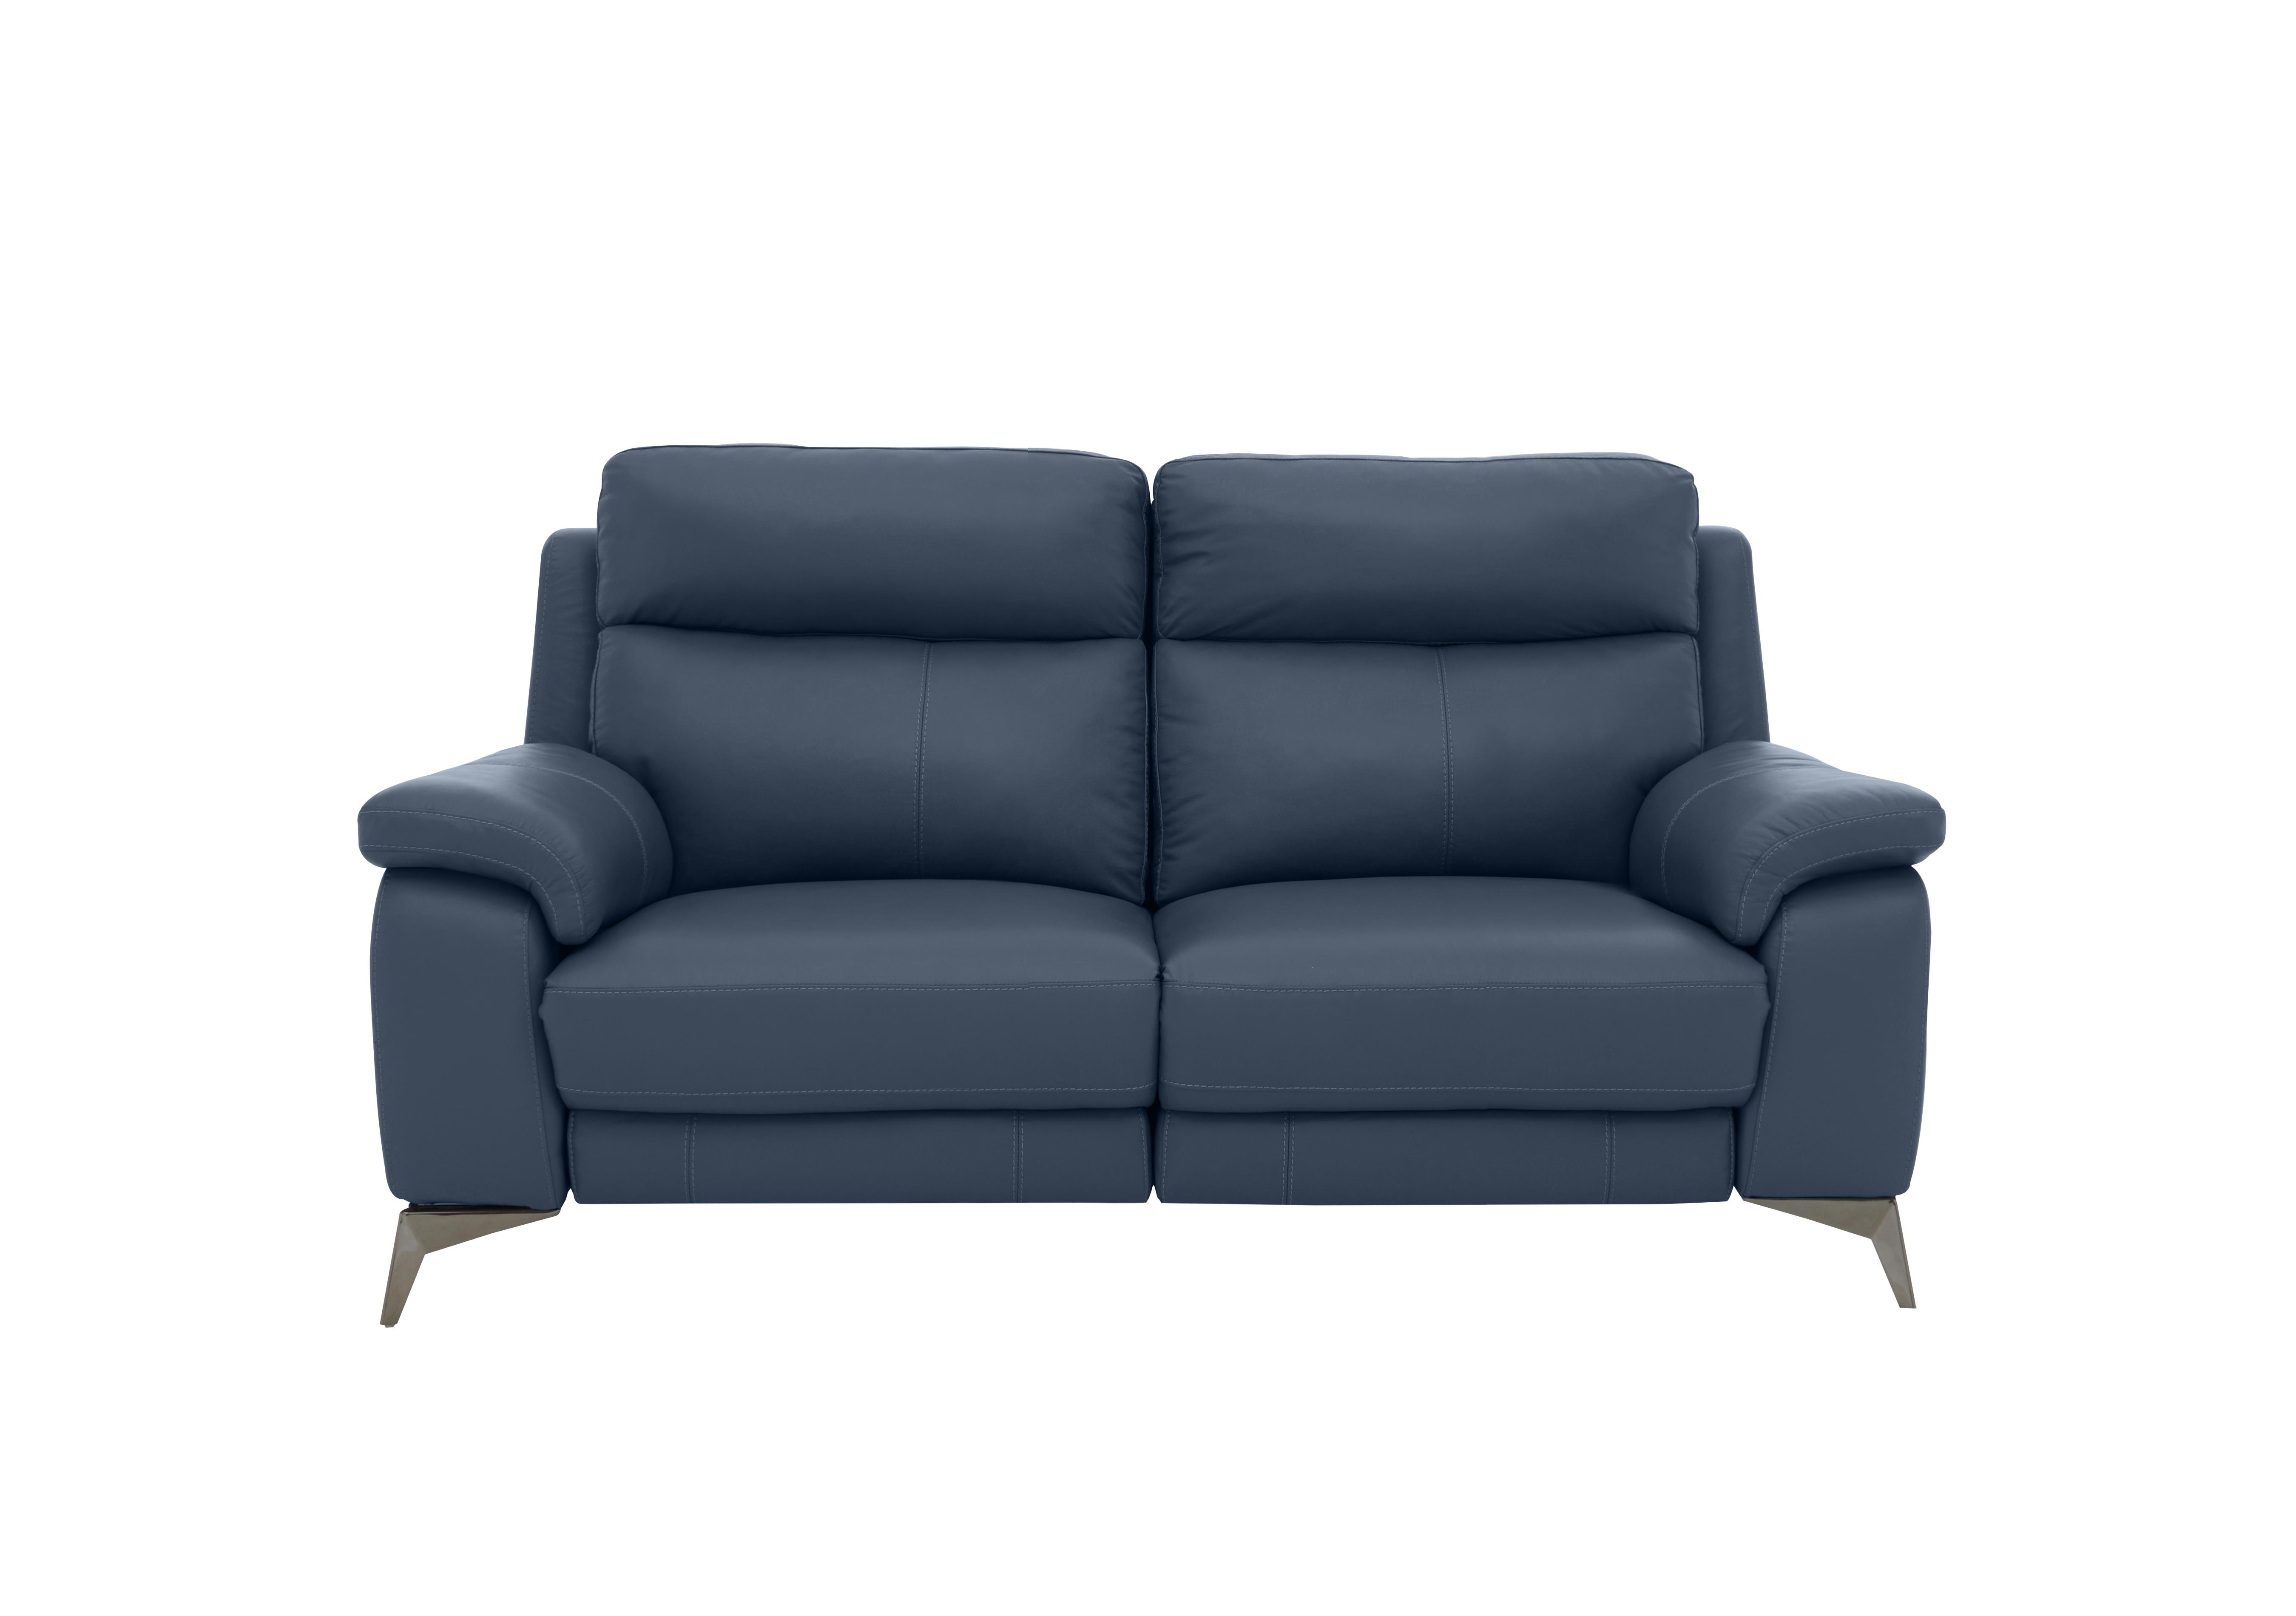 Missouri 2 Seater Leather Sofa in Bv-313e Ocean Blue on Furniture Village